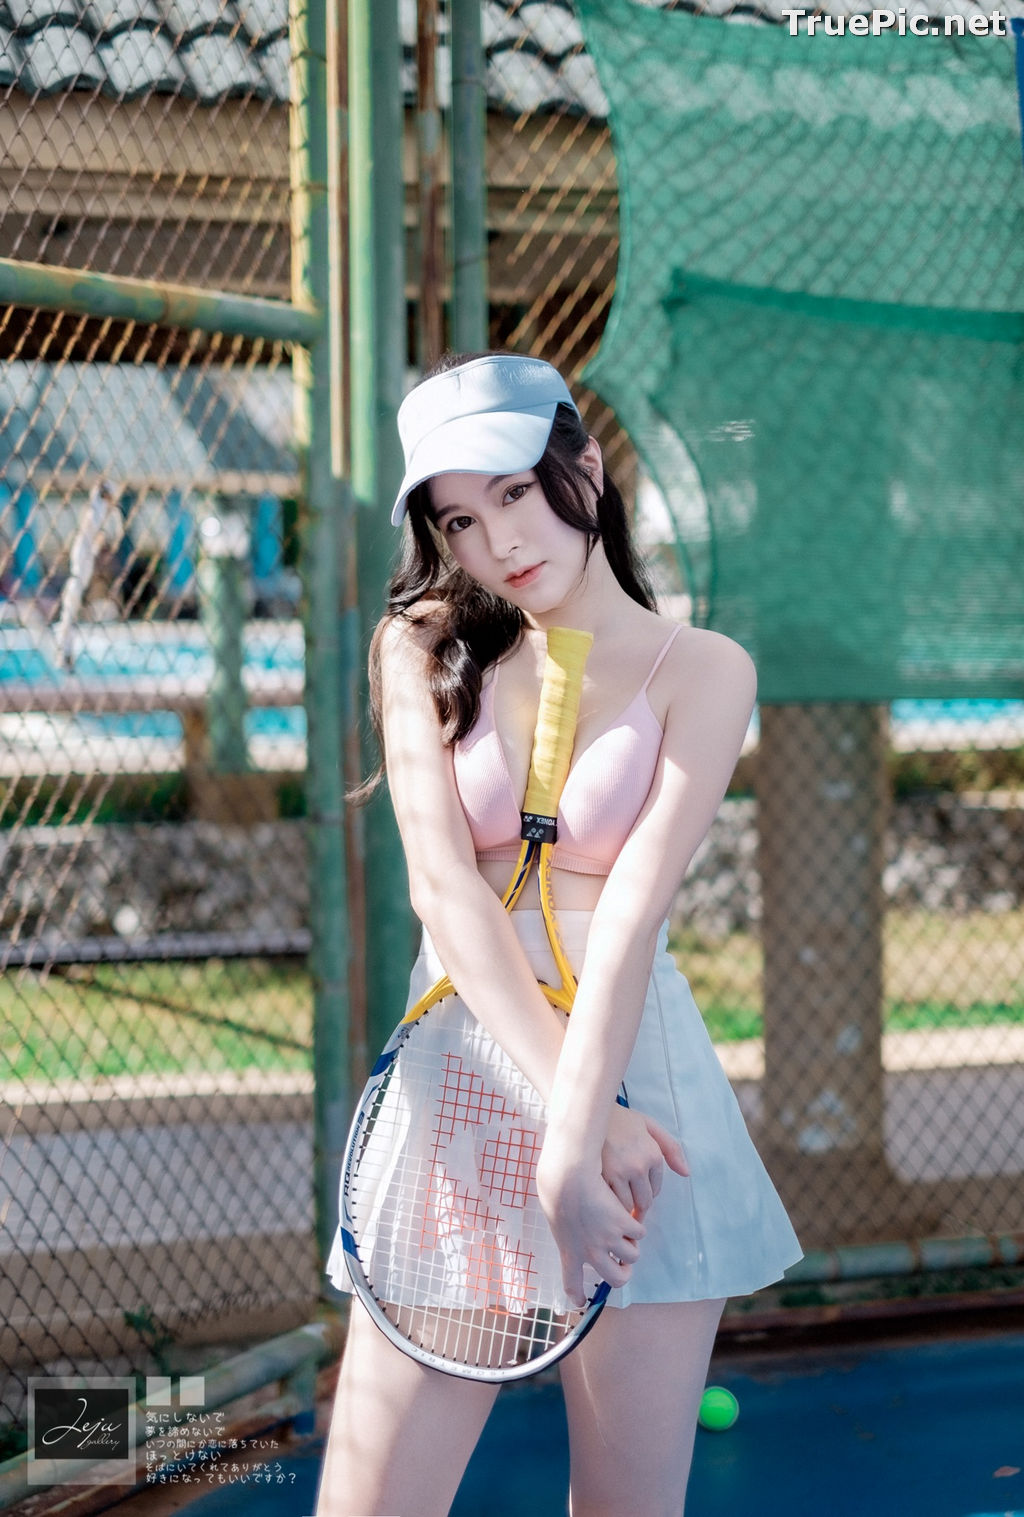 Image Thailand Model - Sarutaya Tawechaisupaphong - Hot Girl Tennis - TruePic.net - Picture-14